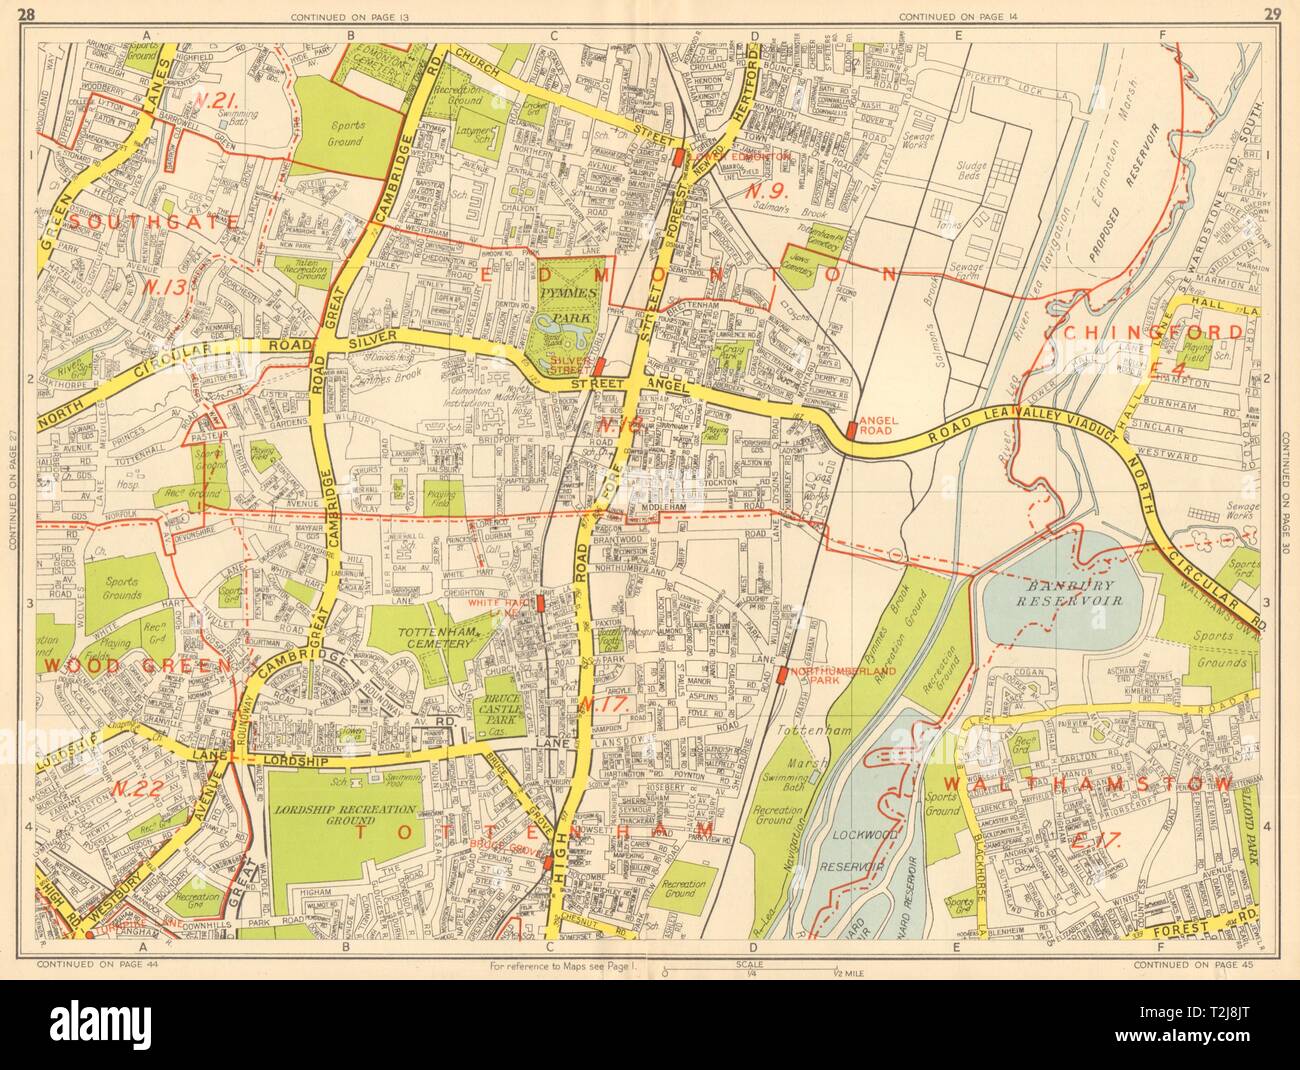 TOTTENHAM EDMONTON Walthamstow Wood Green Bruce Grove. Geographen "A-Z" 1948 Karte Stockfoto